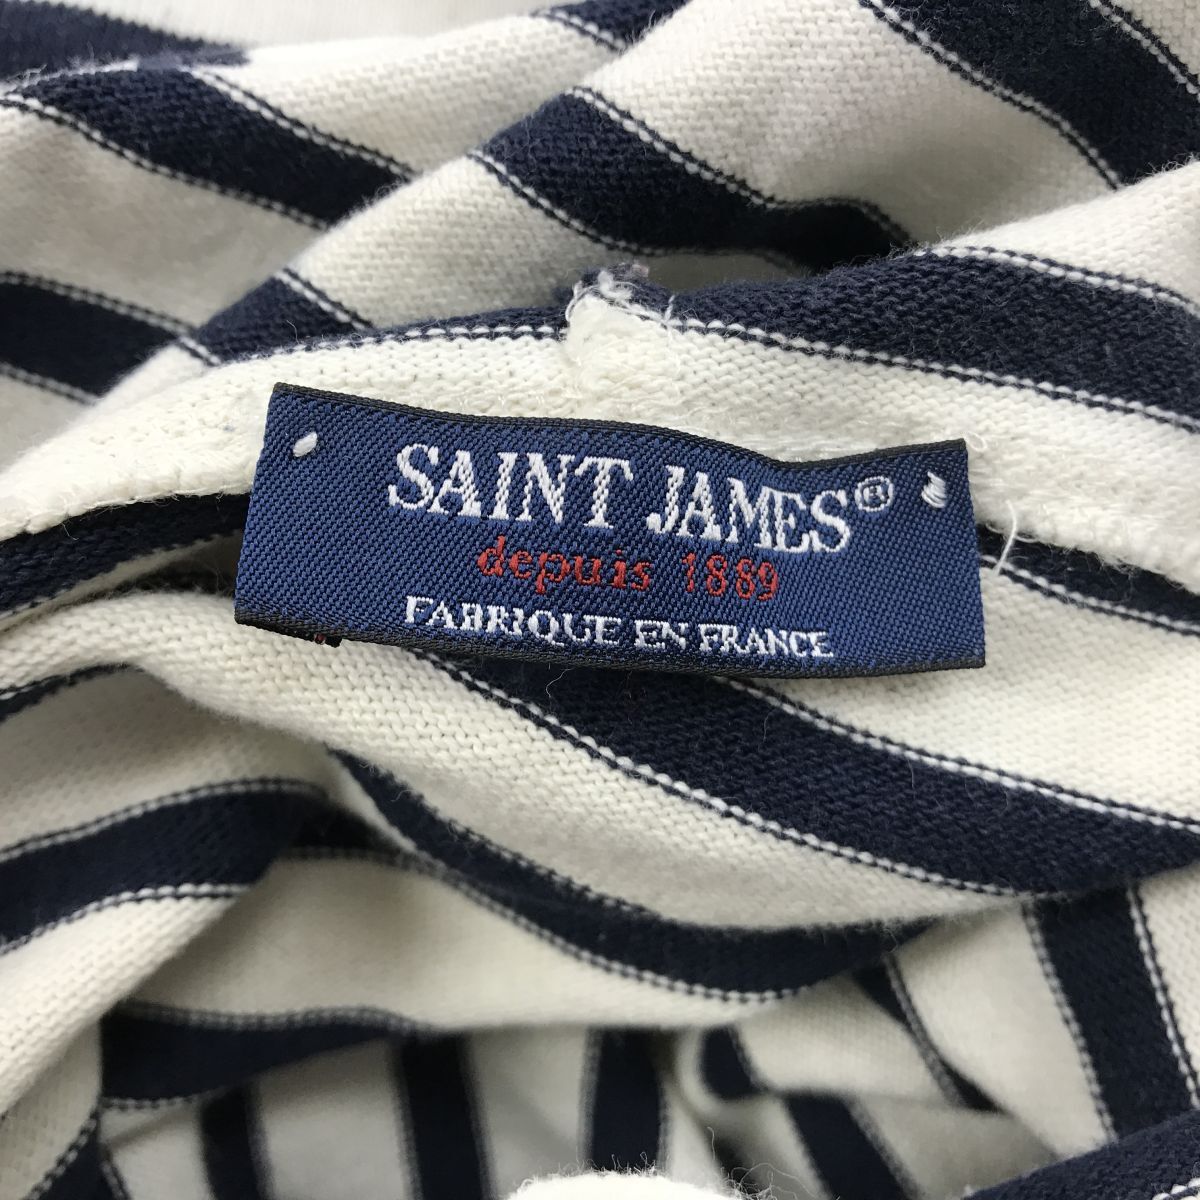 A1091-D* superior article * France made * SAINT JAMES St. James long sleeve T shirt f-ti- cut and sewn bus k shirt *sizeM navy border 